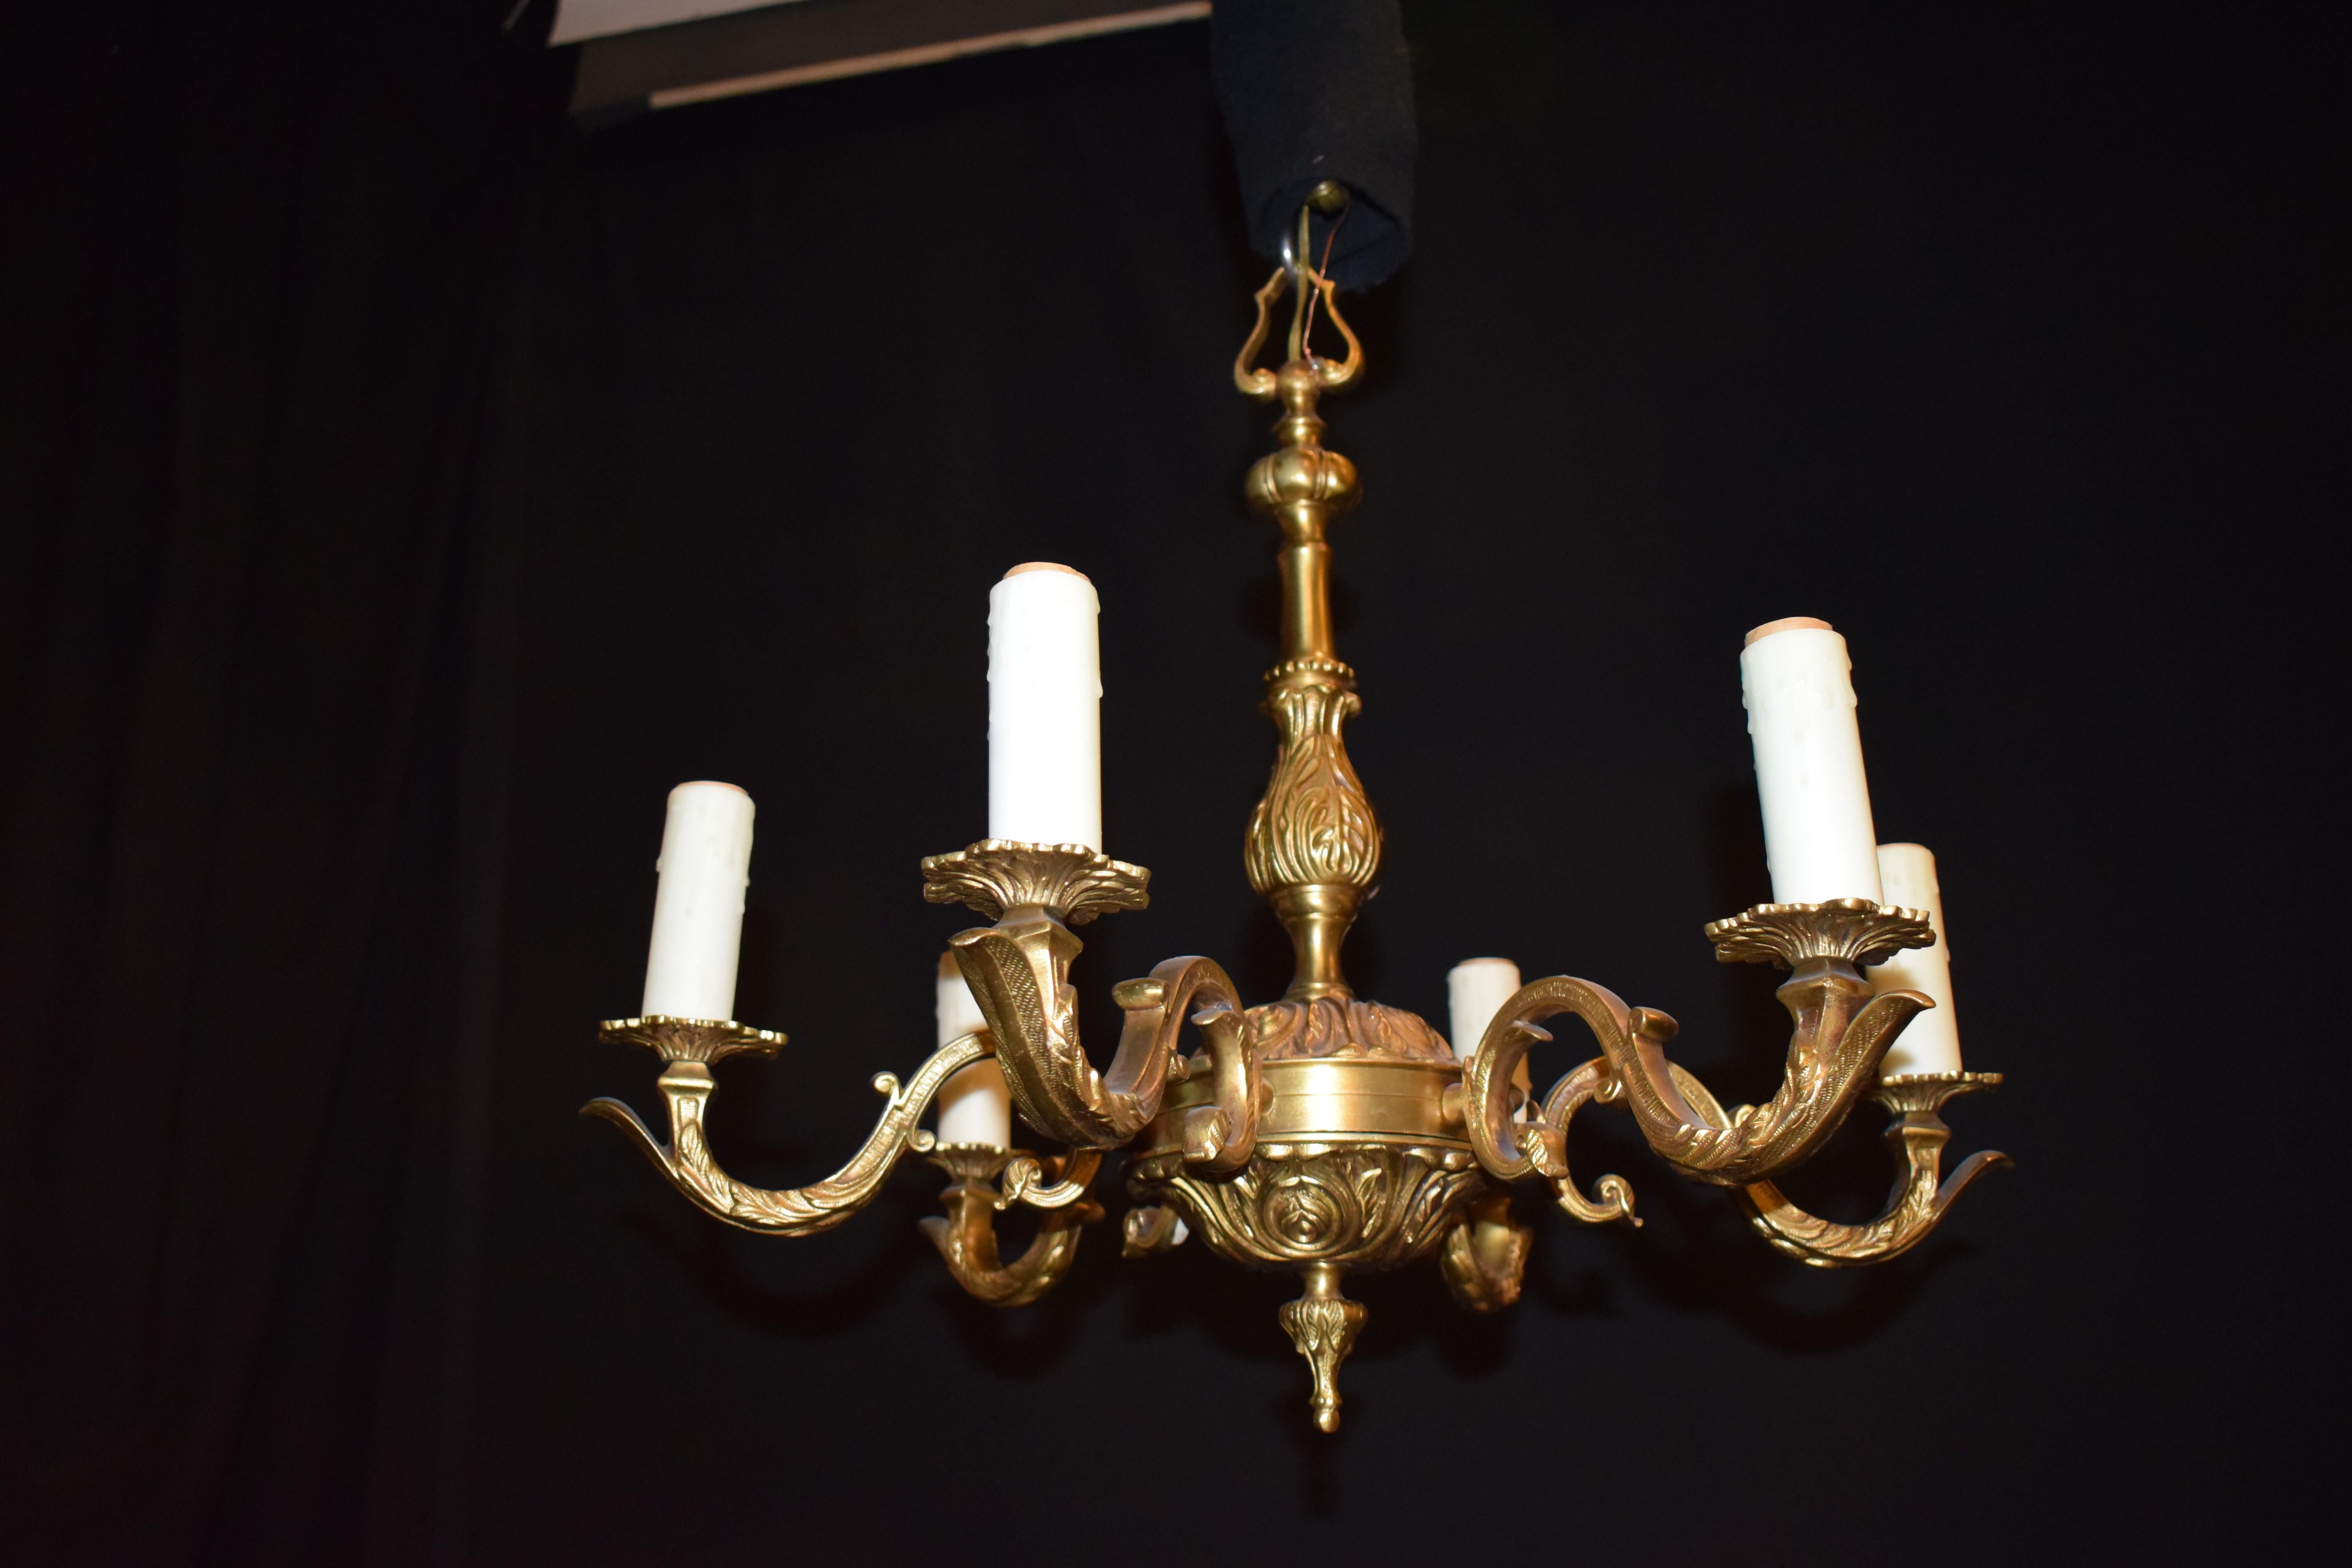 Gilt bronze chandelier, 6 lights. France, circa 1940
Dimensions: Height 21